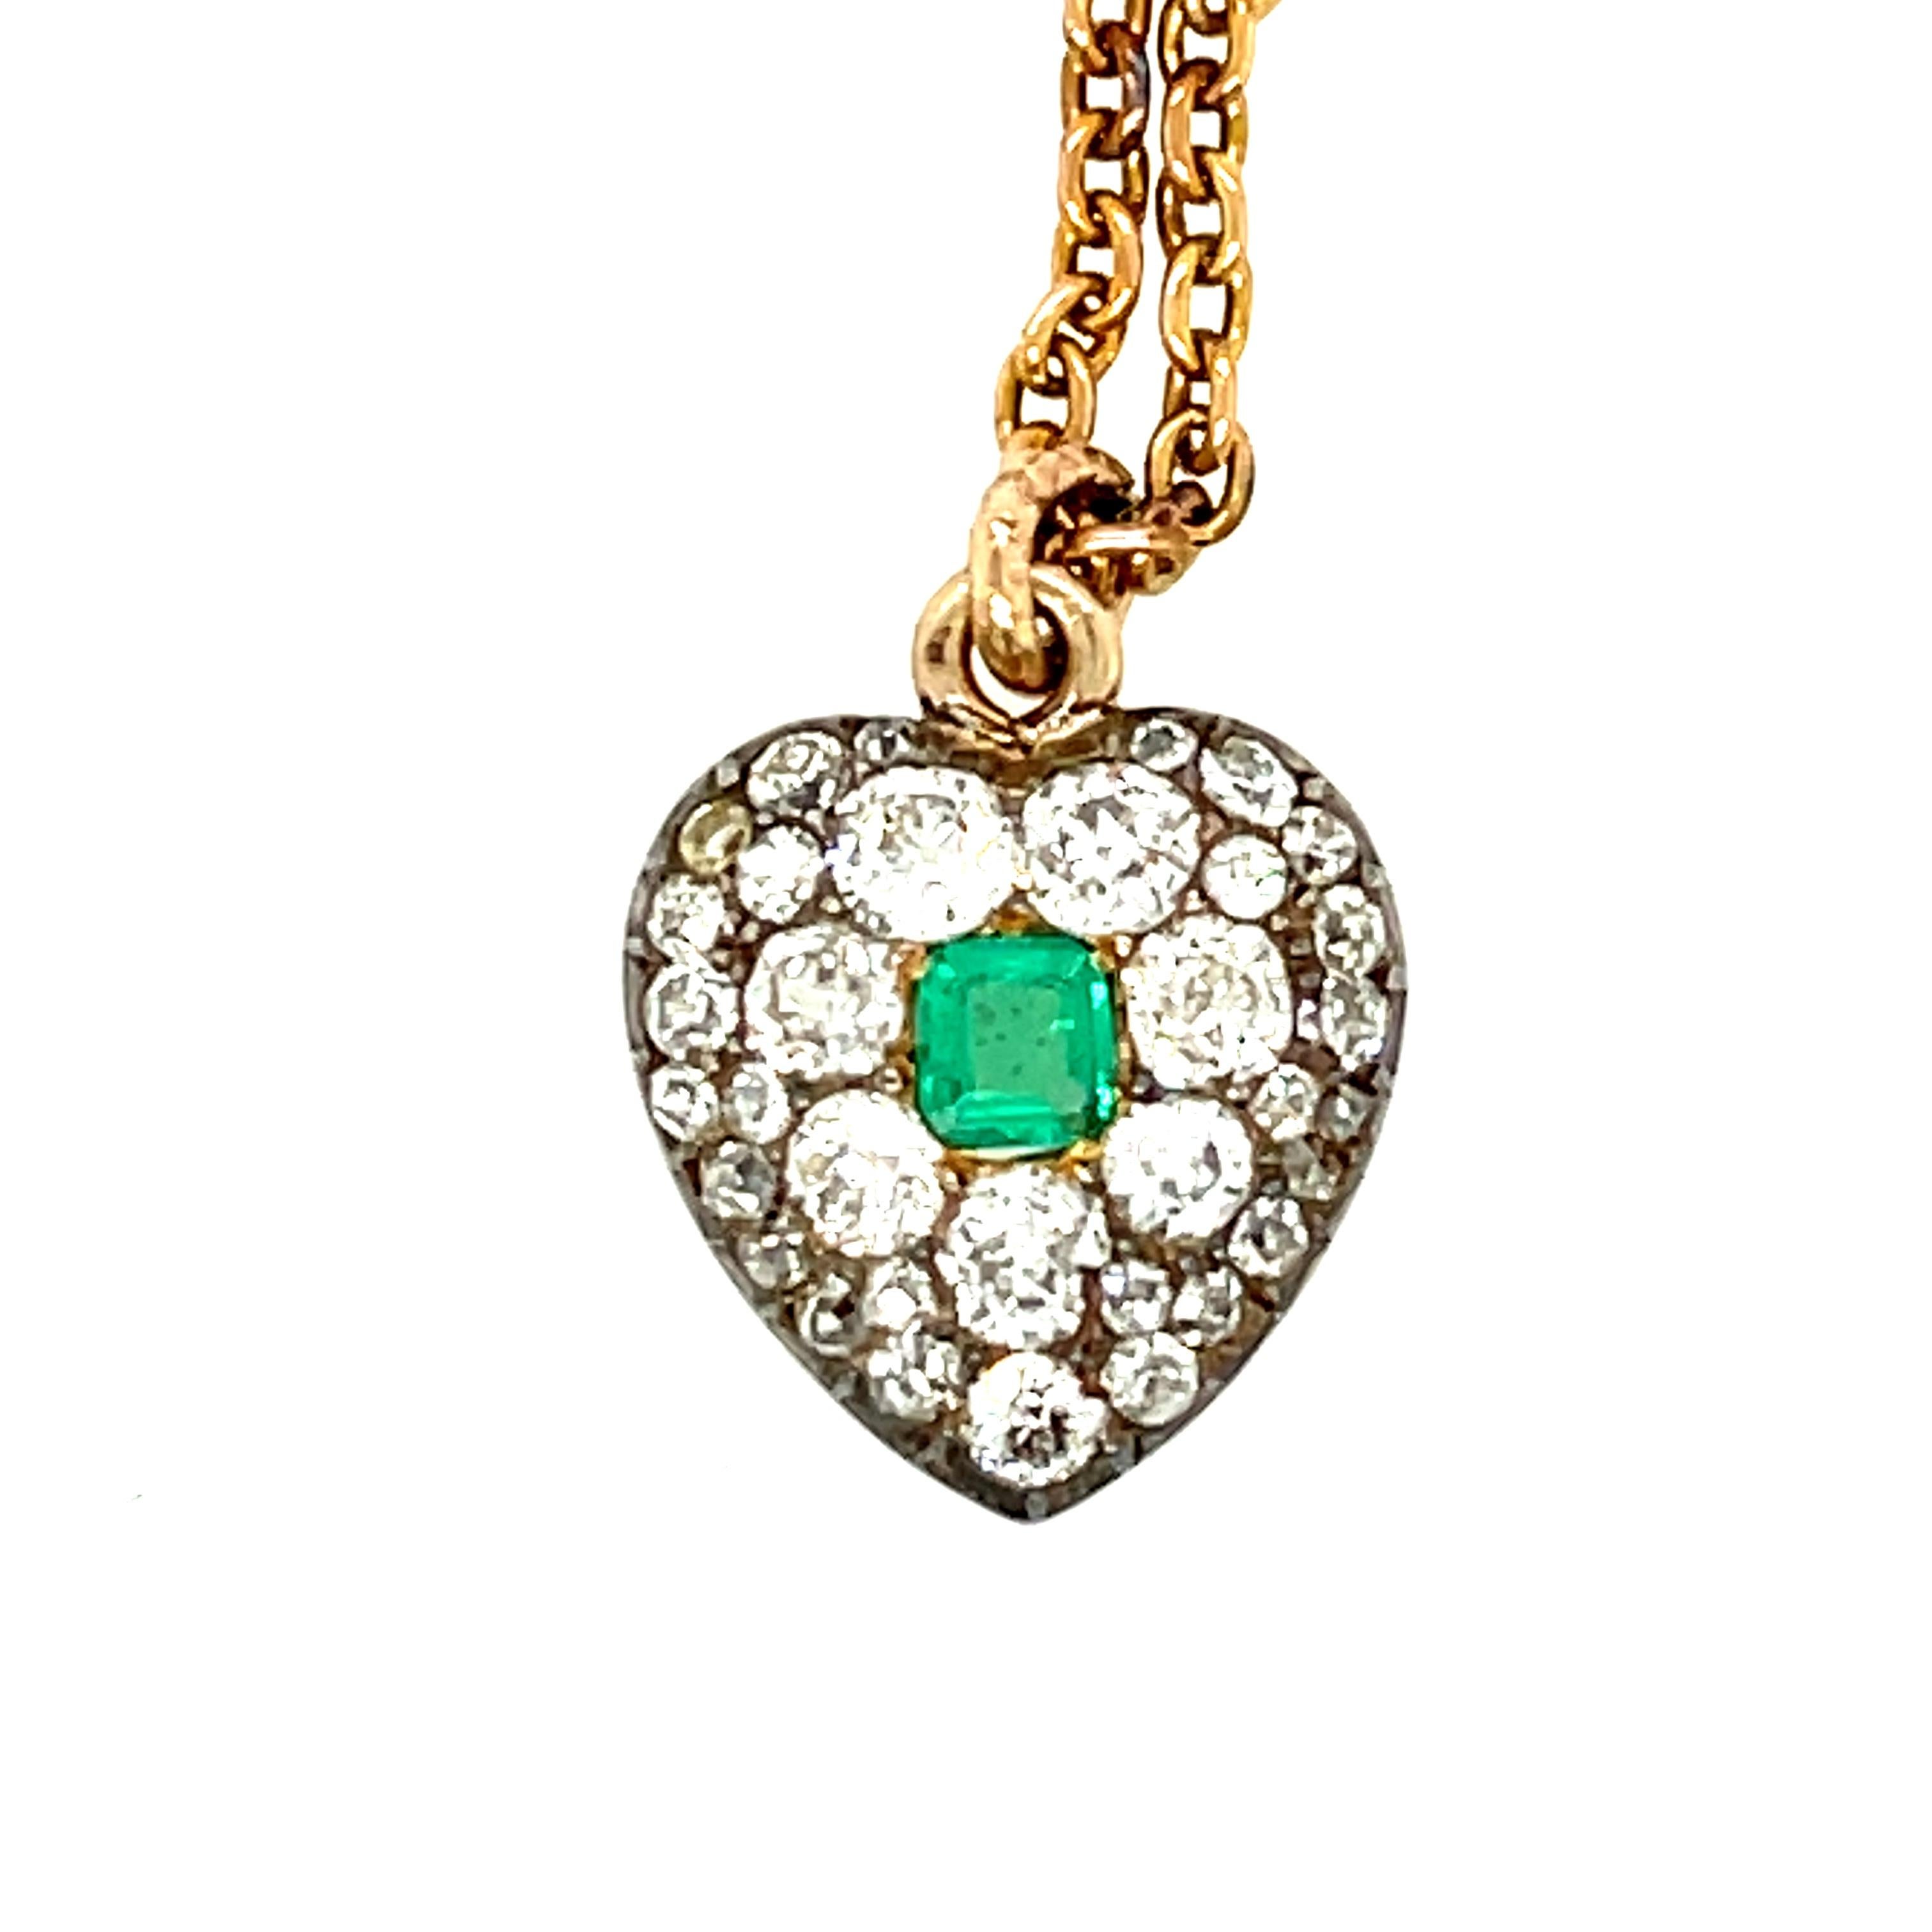 Late Victorian Antique Victorian Silver Gold Old Cut Diamond Emerald Heart Pendant Necklace